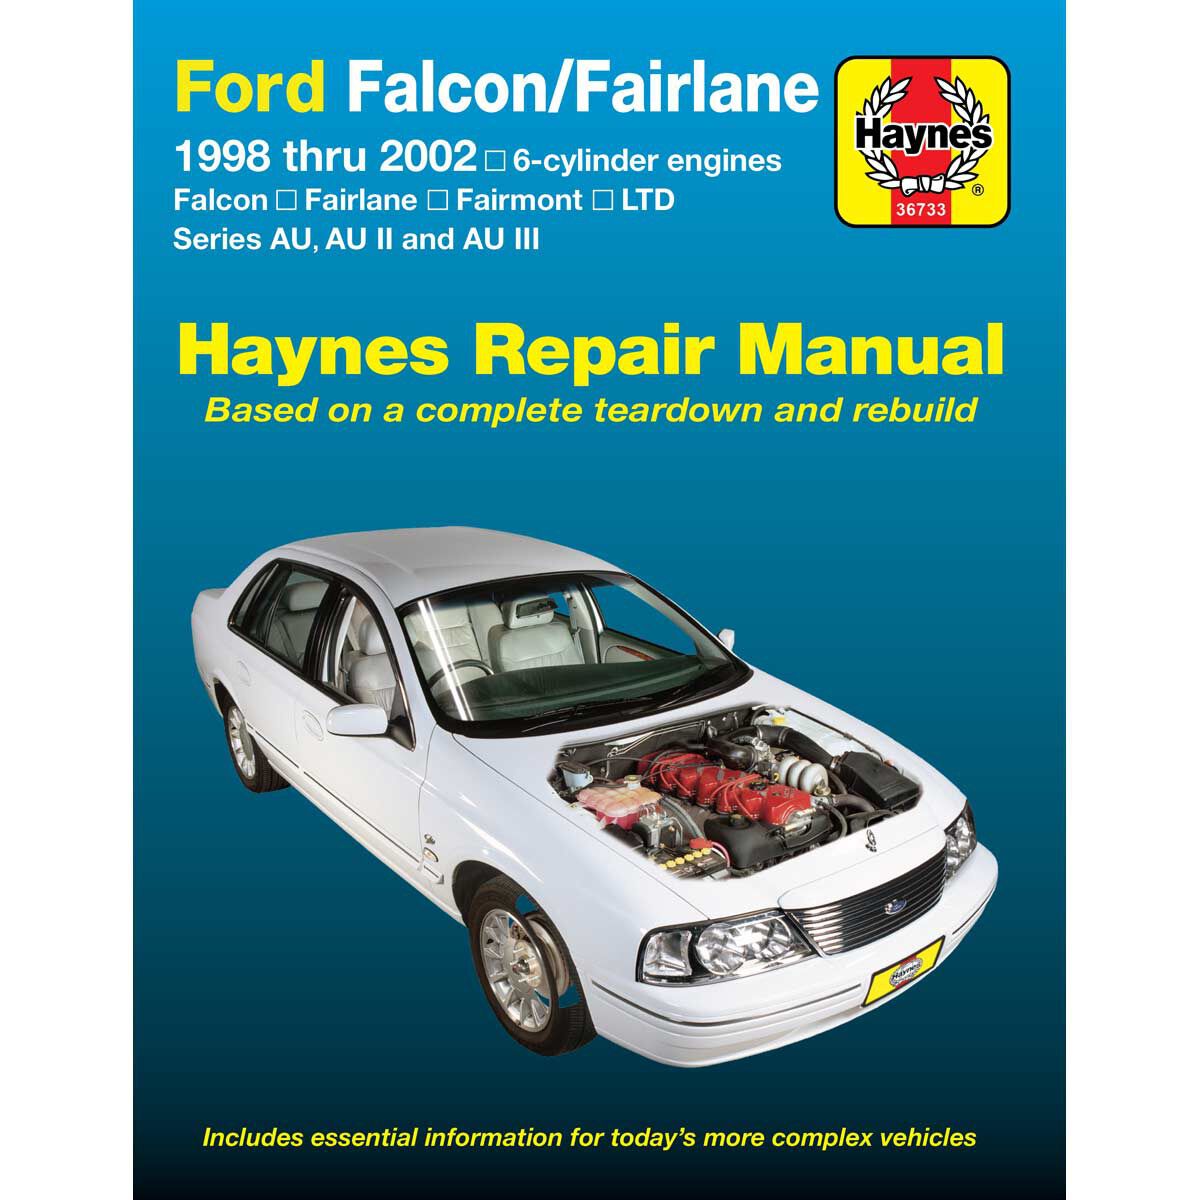 Haynes Car Manual For Ford Falcon / Fairlane 1998-2002 - 36733, , scaau_hi-res